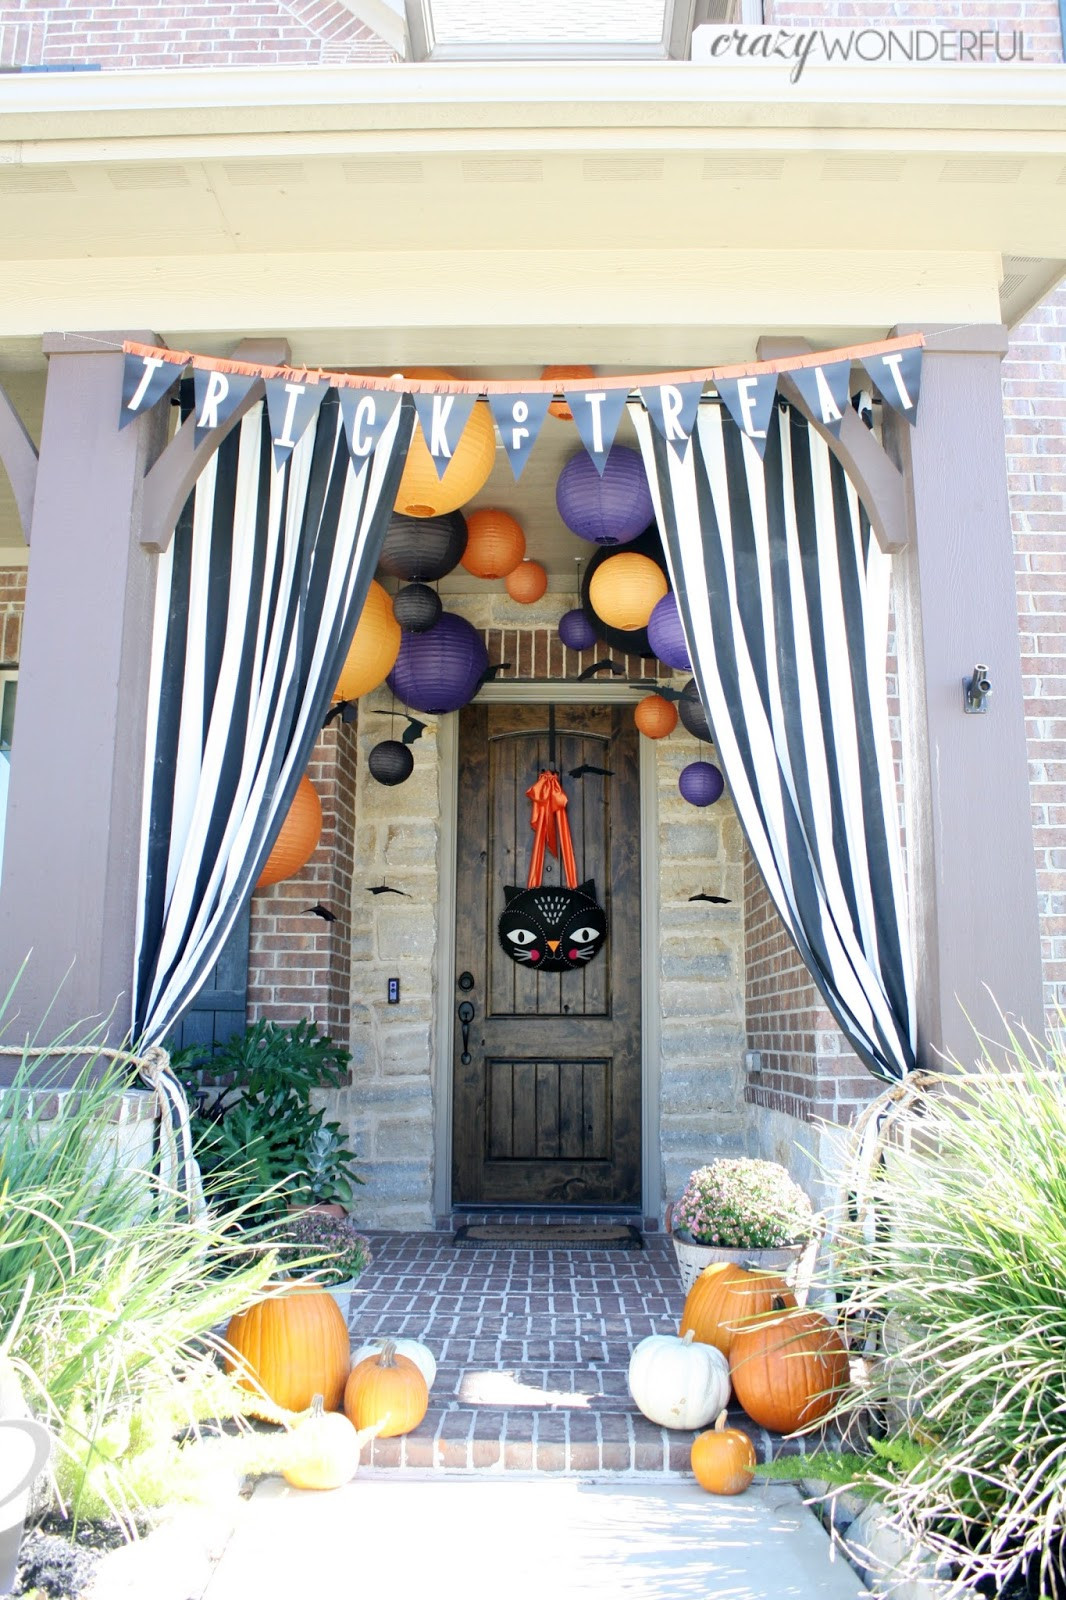 Porch Halloween Decor
 halloween porch decorations Crazy Wonderful